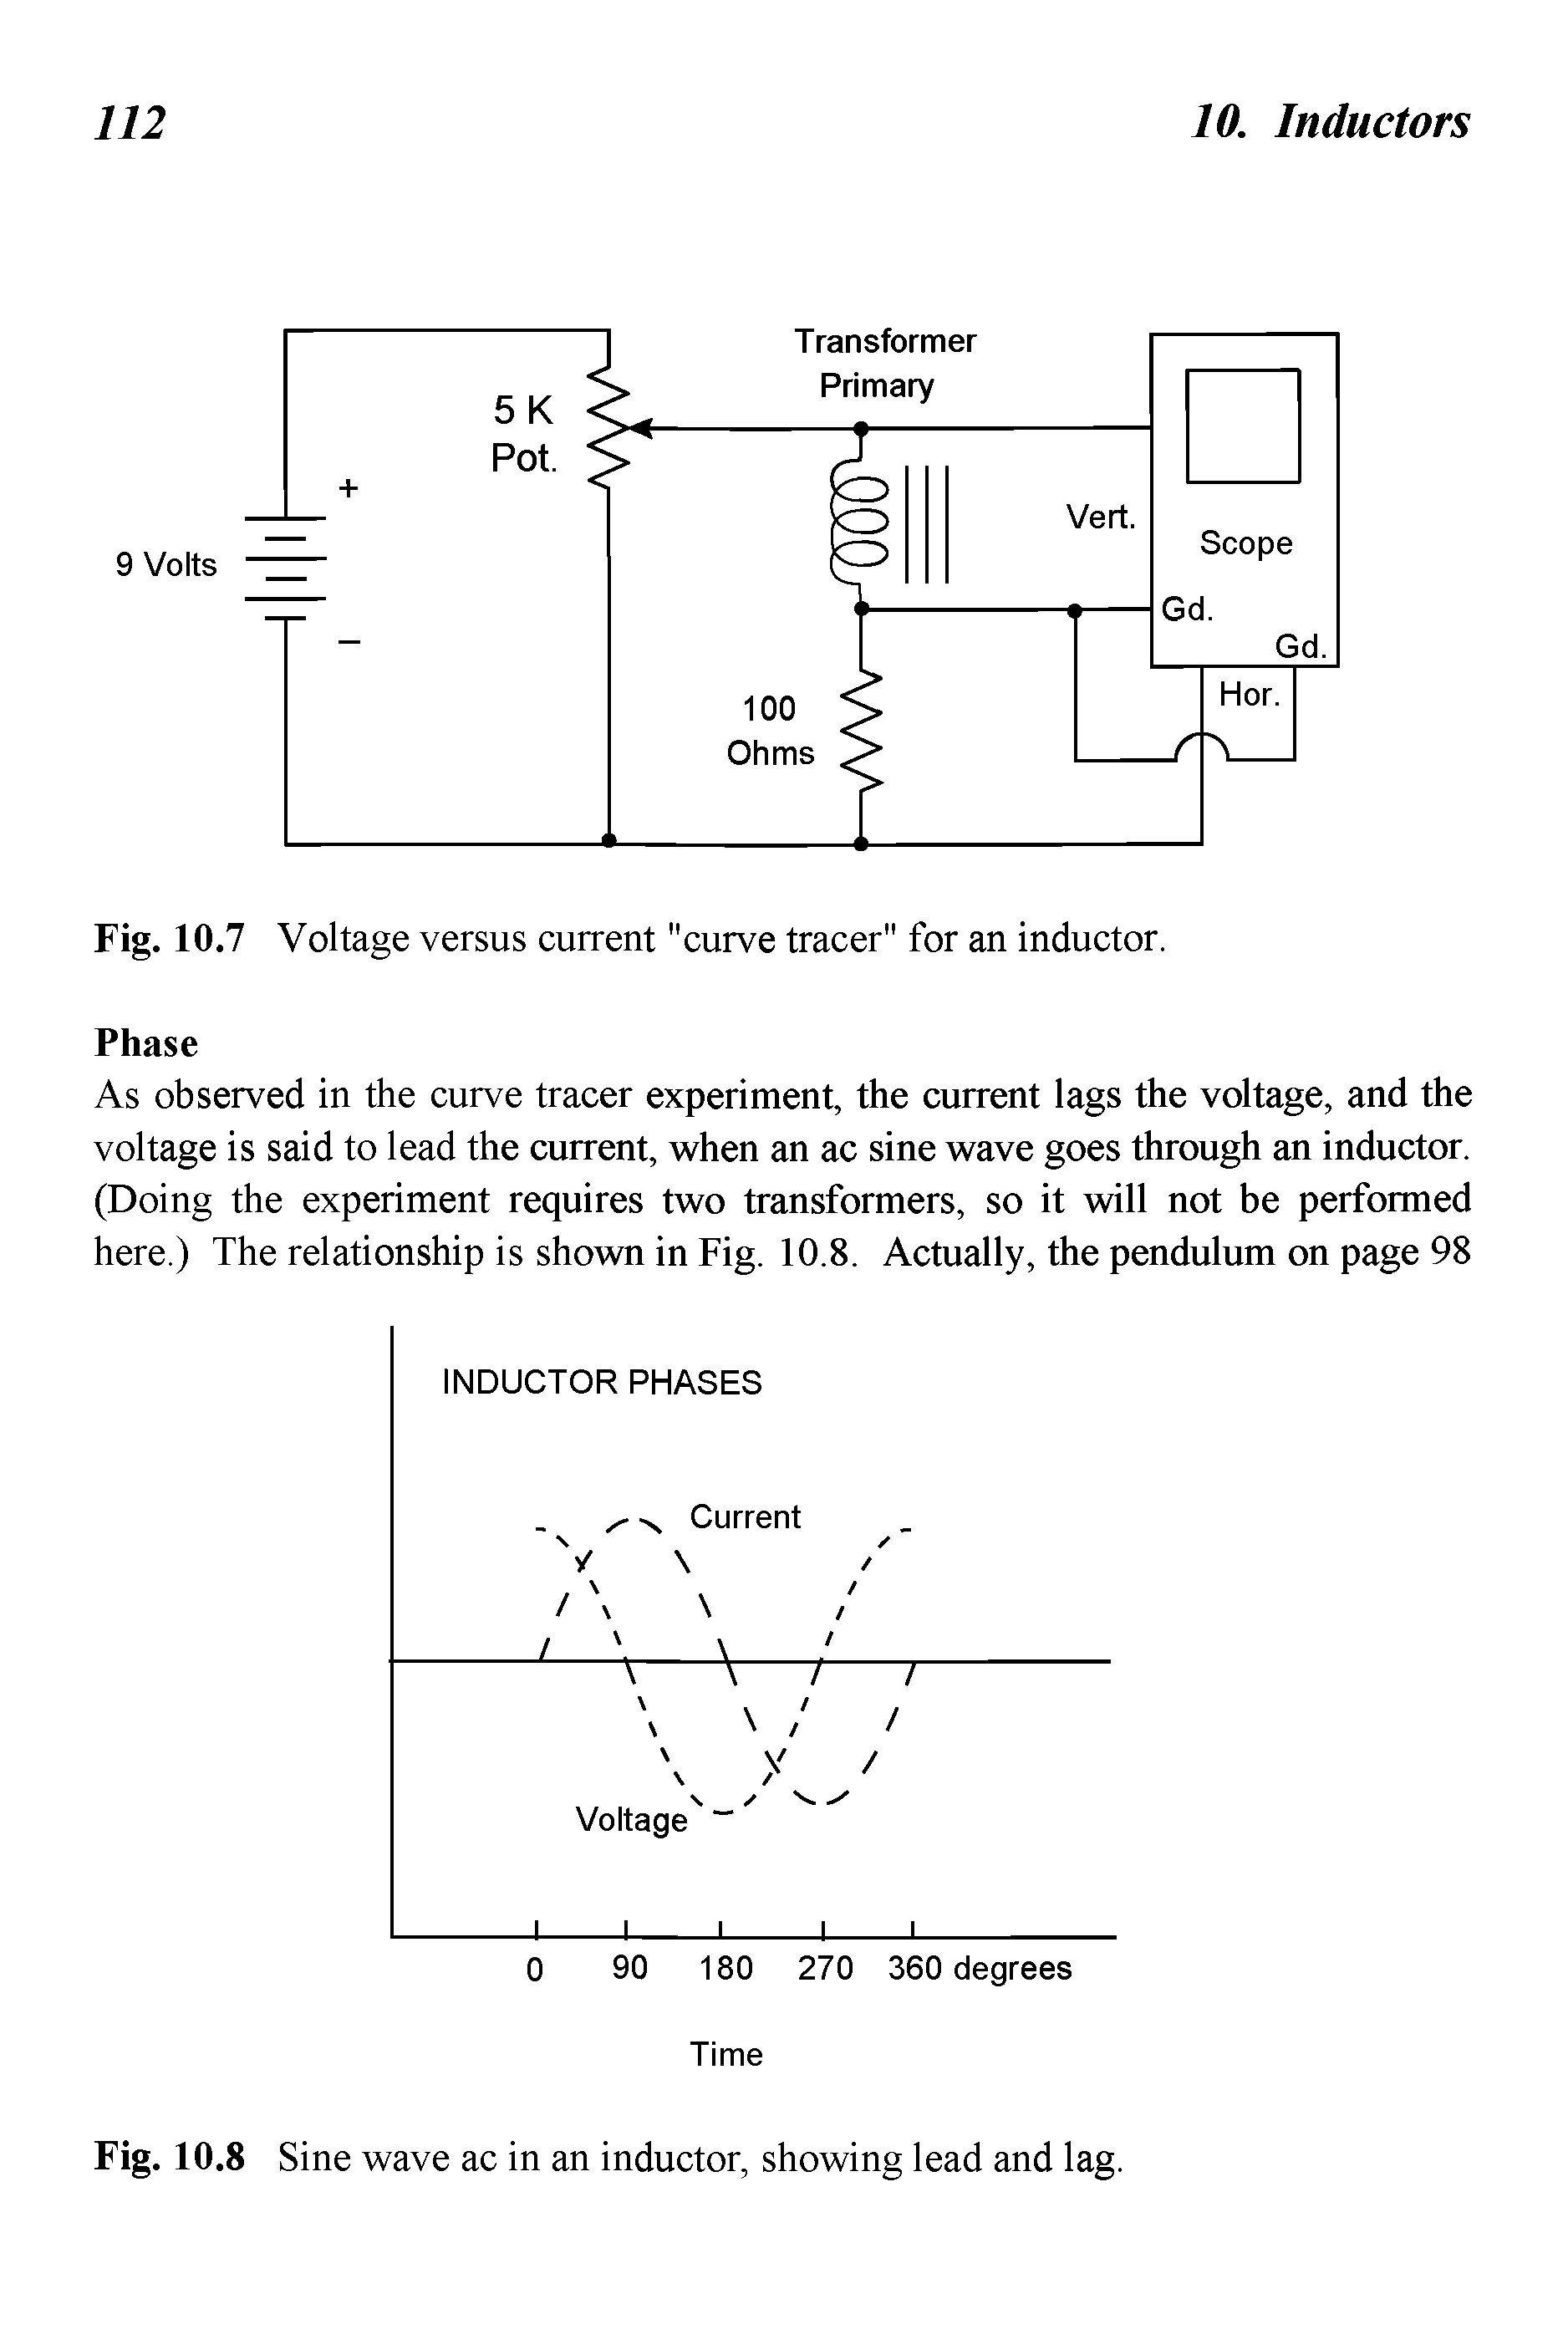 Fig. 10.7 Voltage versus current "curve tracer" for an inductor.